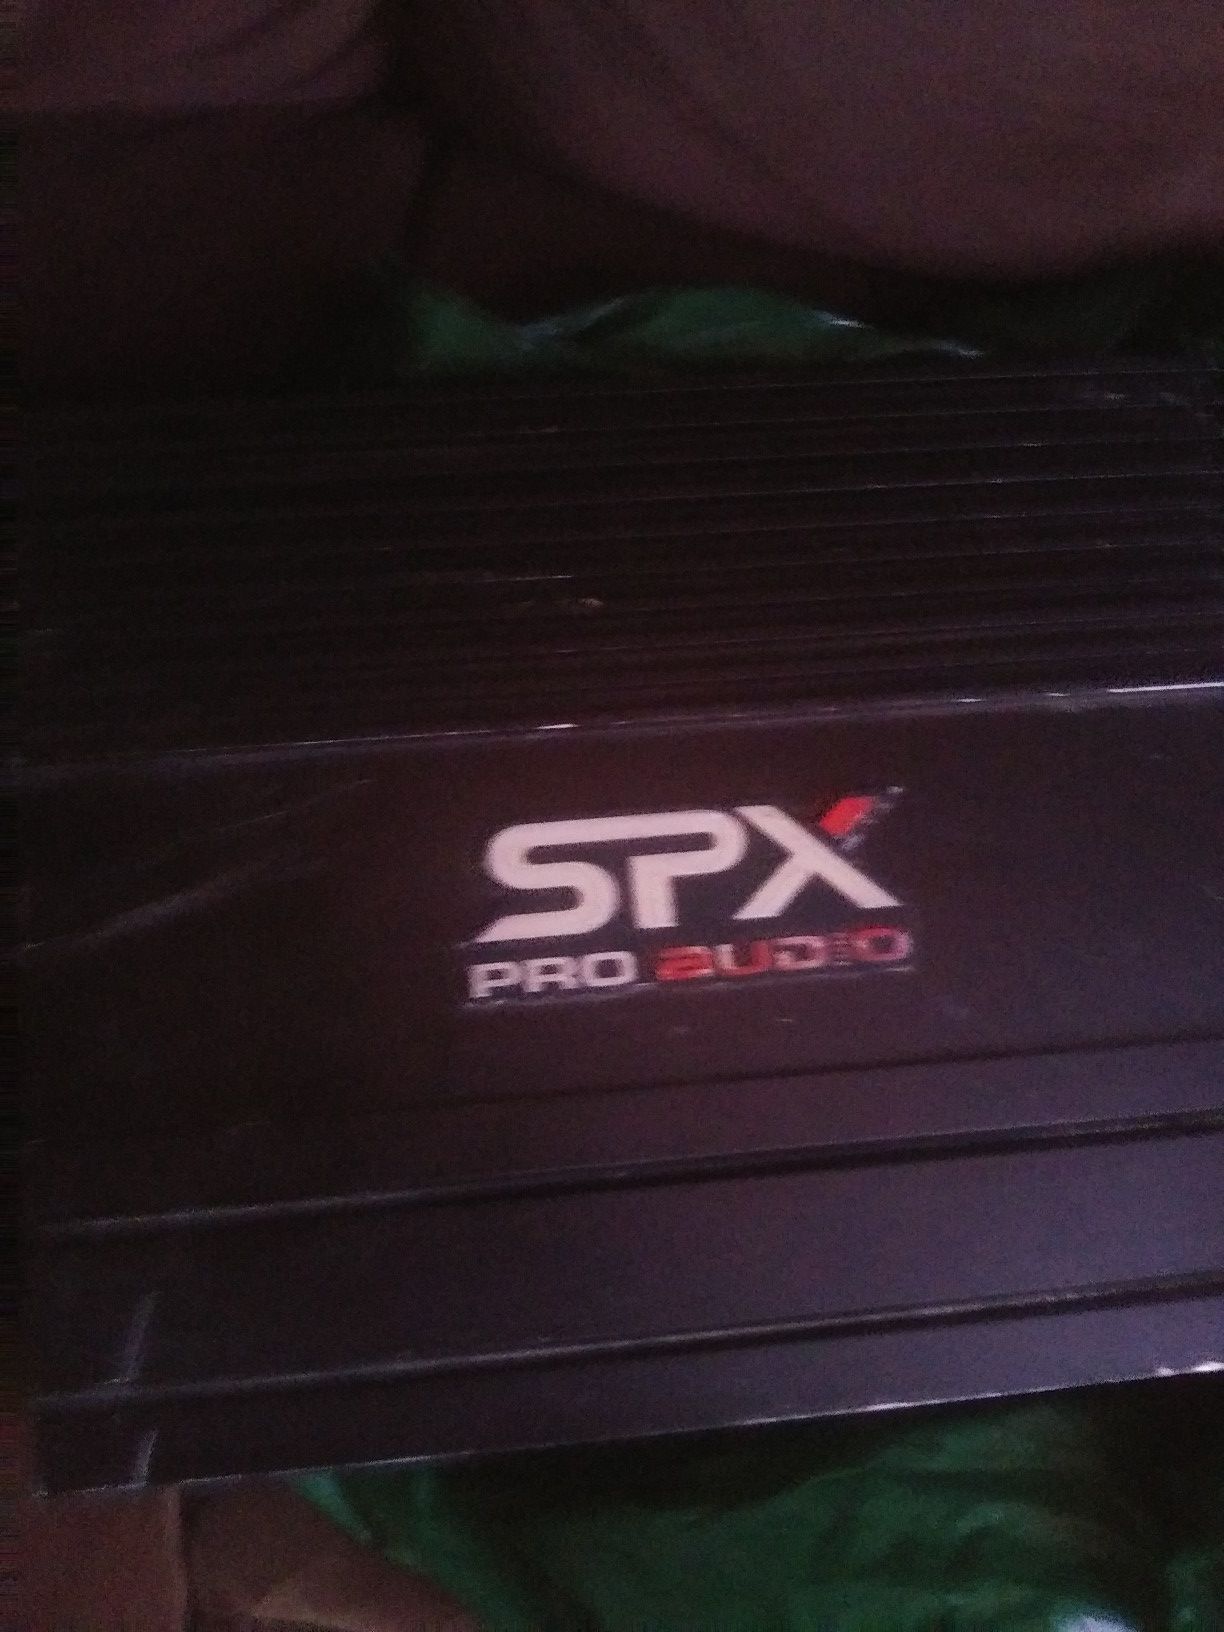 Spx pro audio